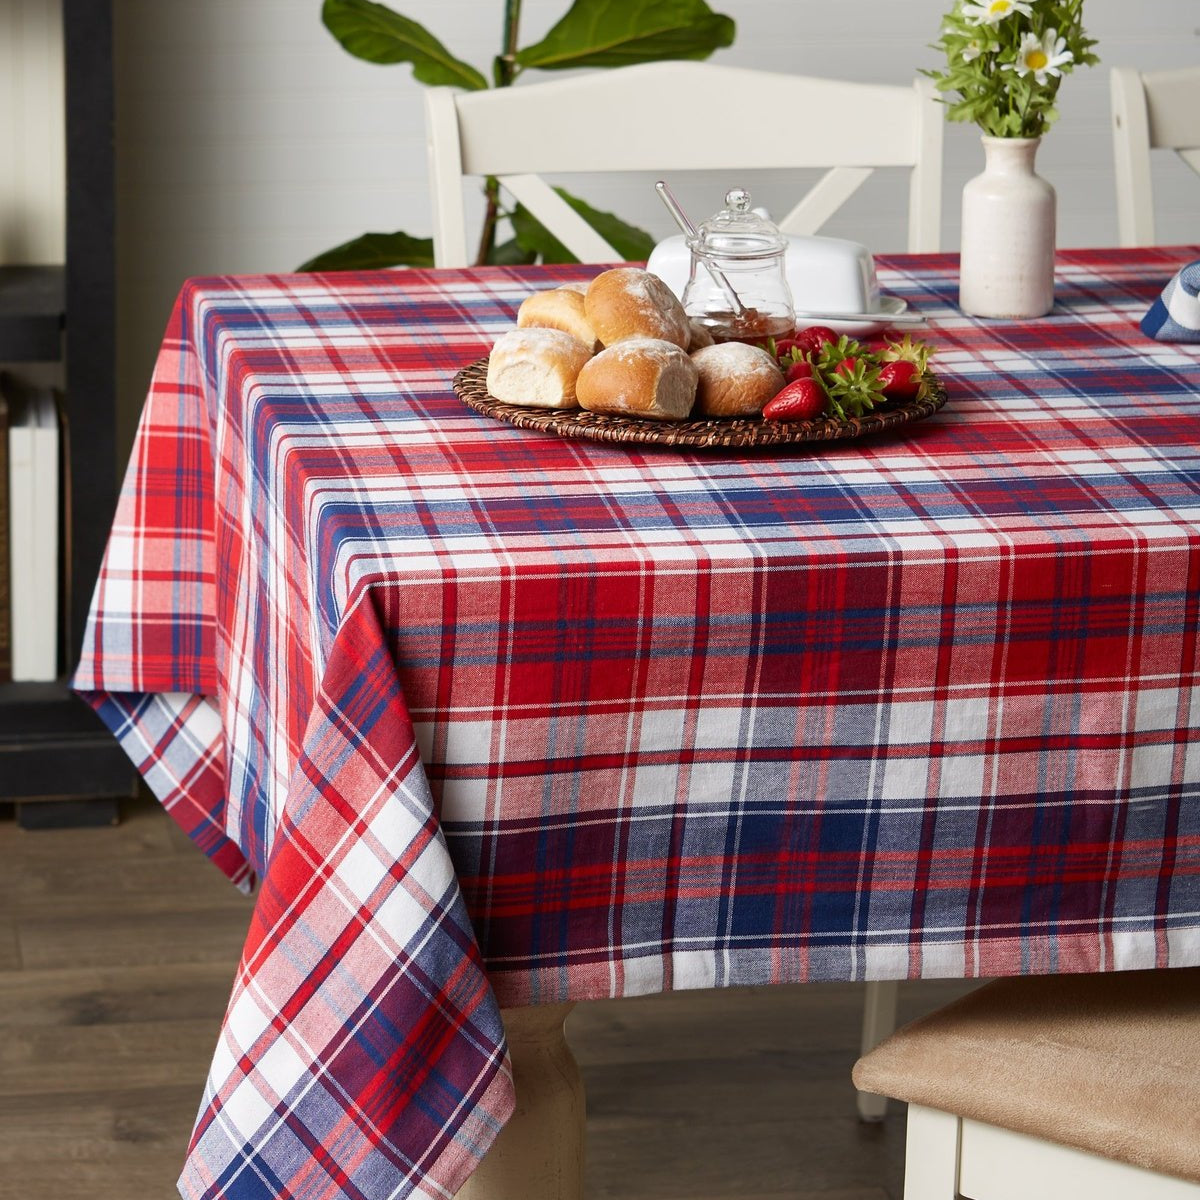 Americana Plaid Tablecloth 60x104 - Pier 1